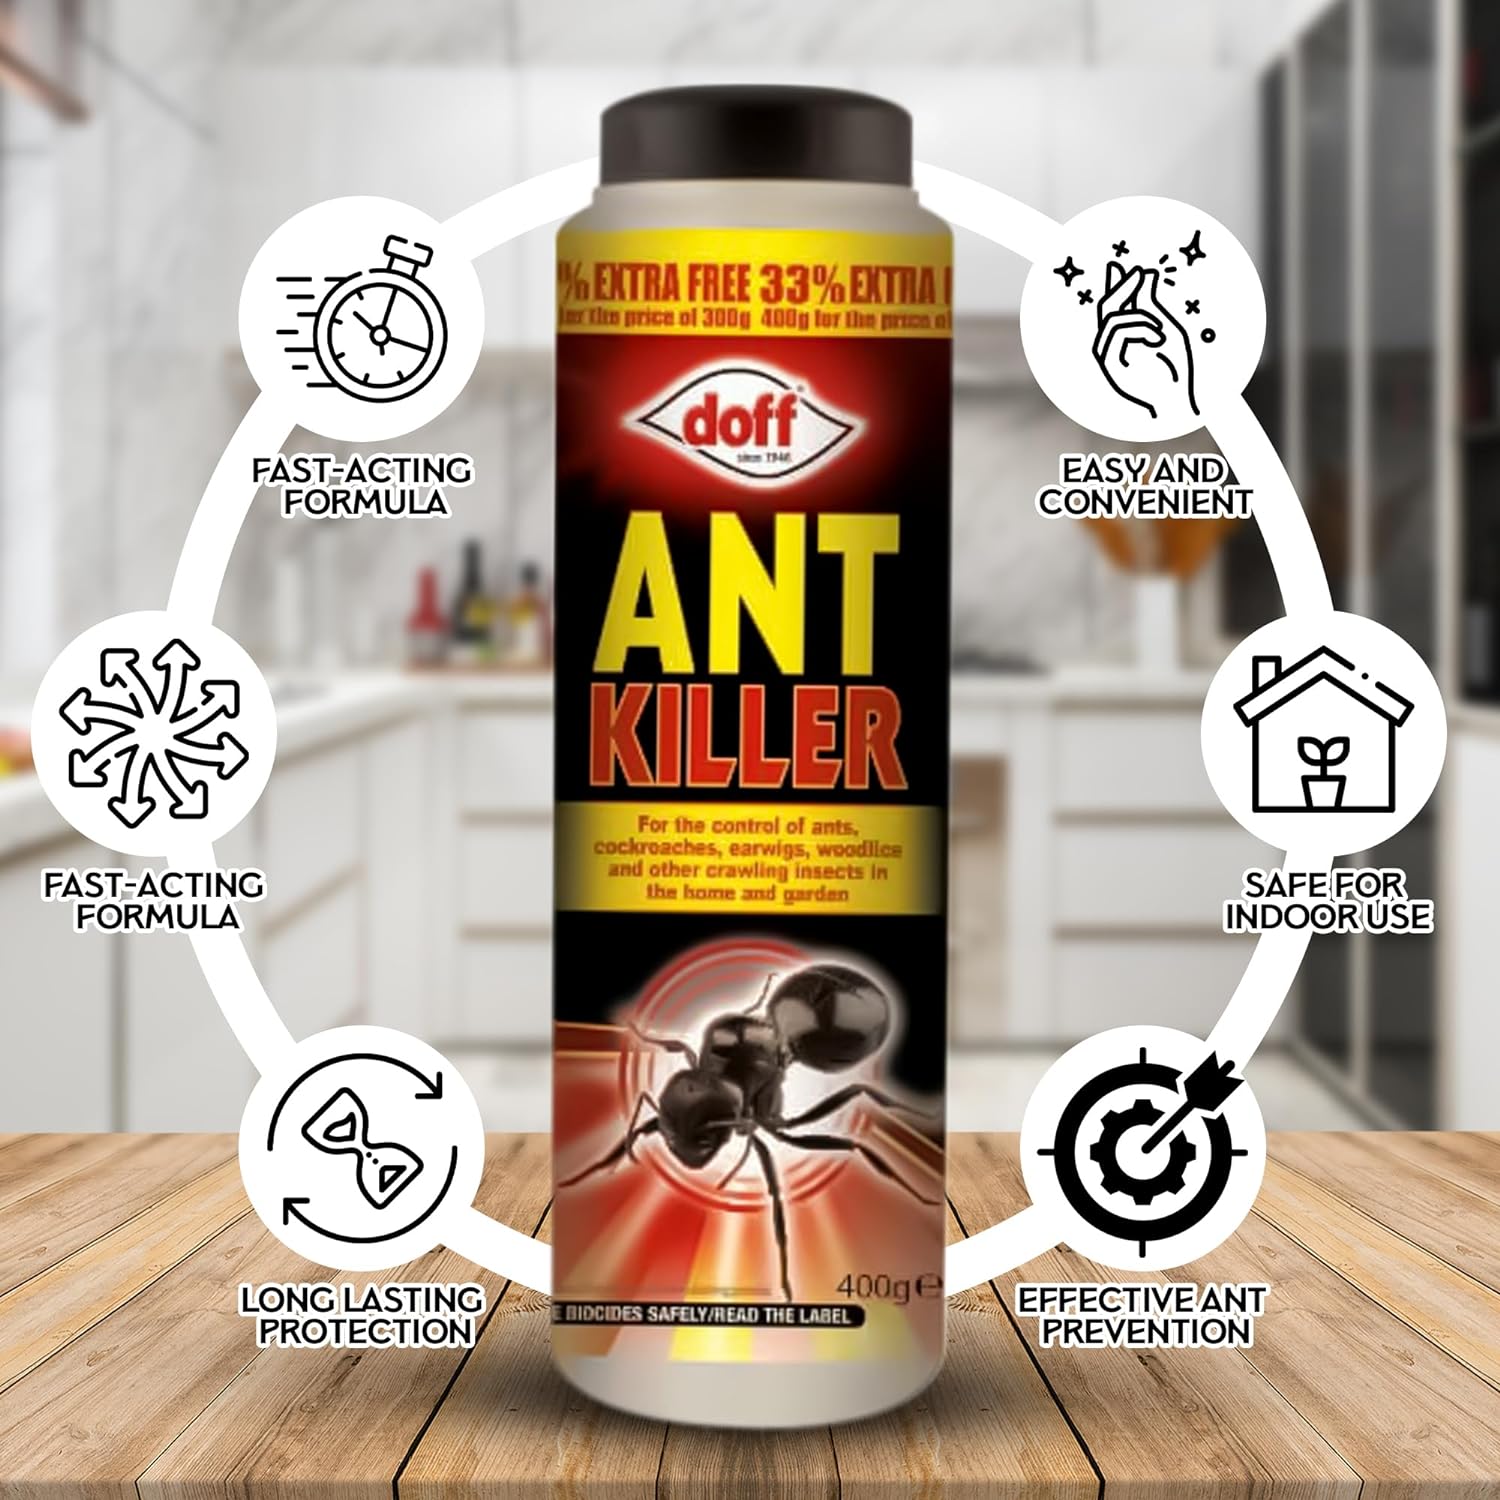 Doff Ant Killer Powder - 400g + 33% Extra Free